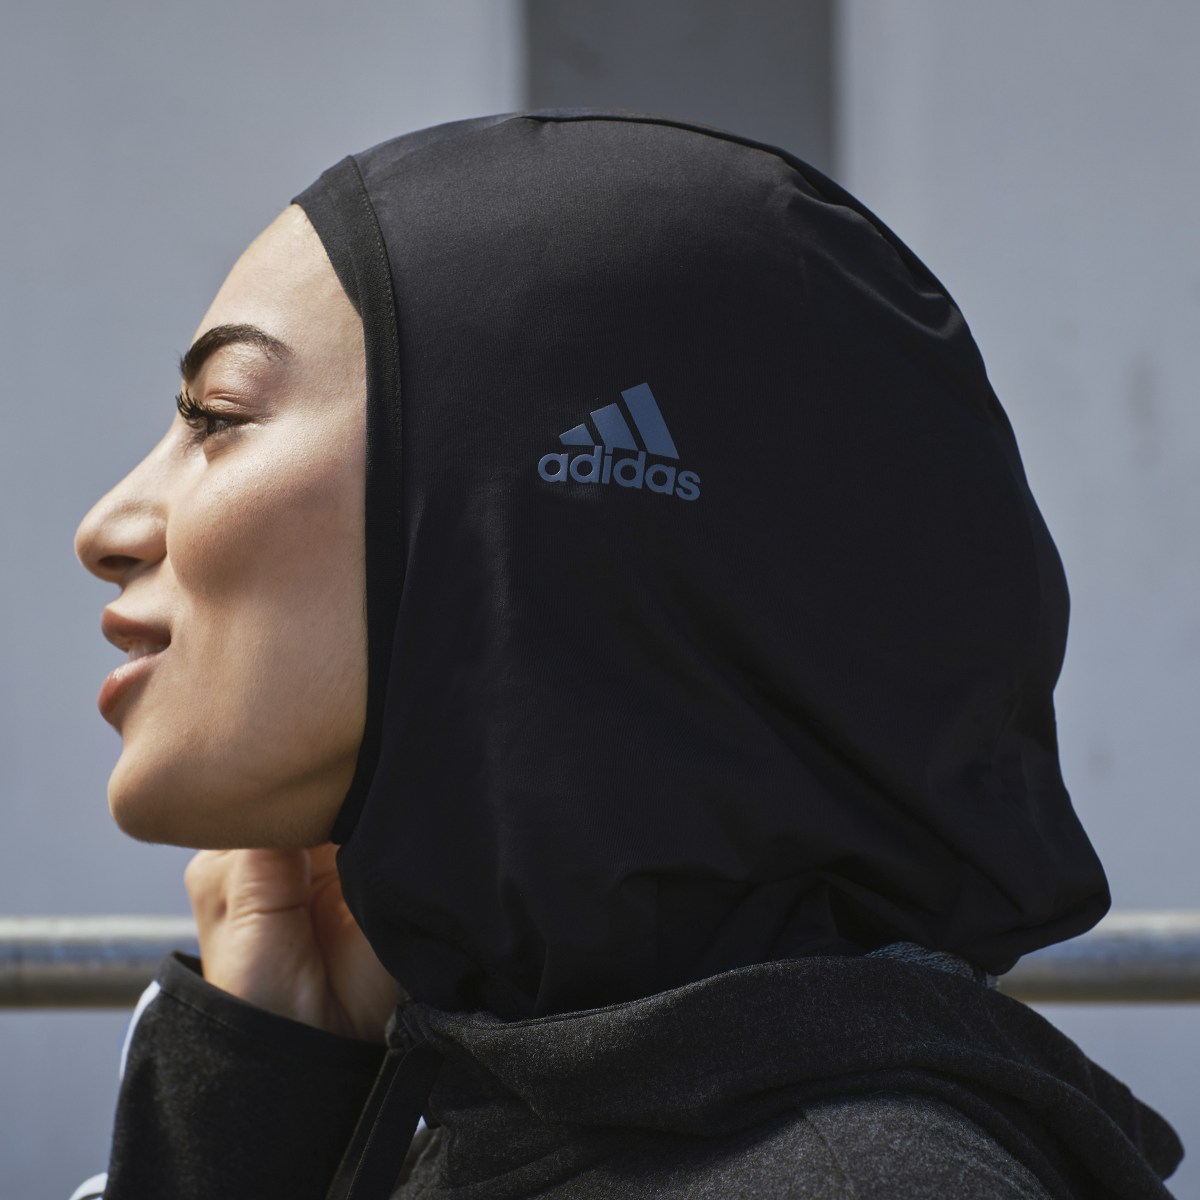 Adidas Sport Hijab 2.0. 6